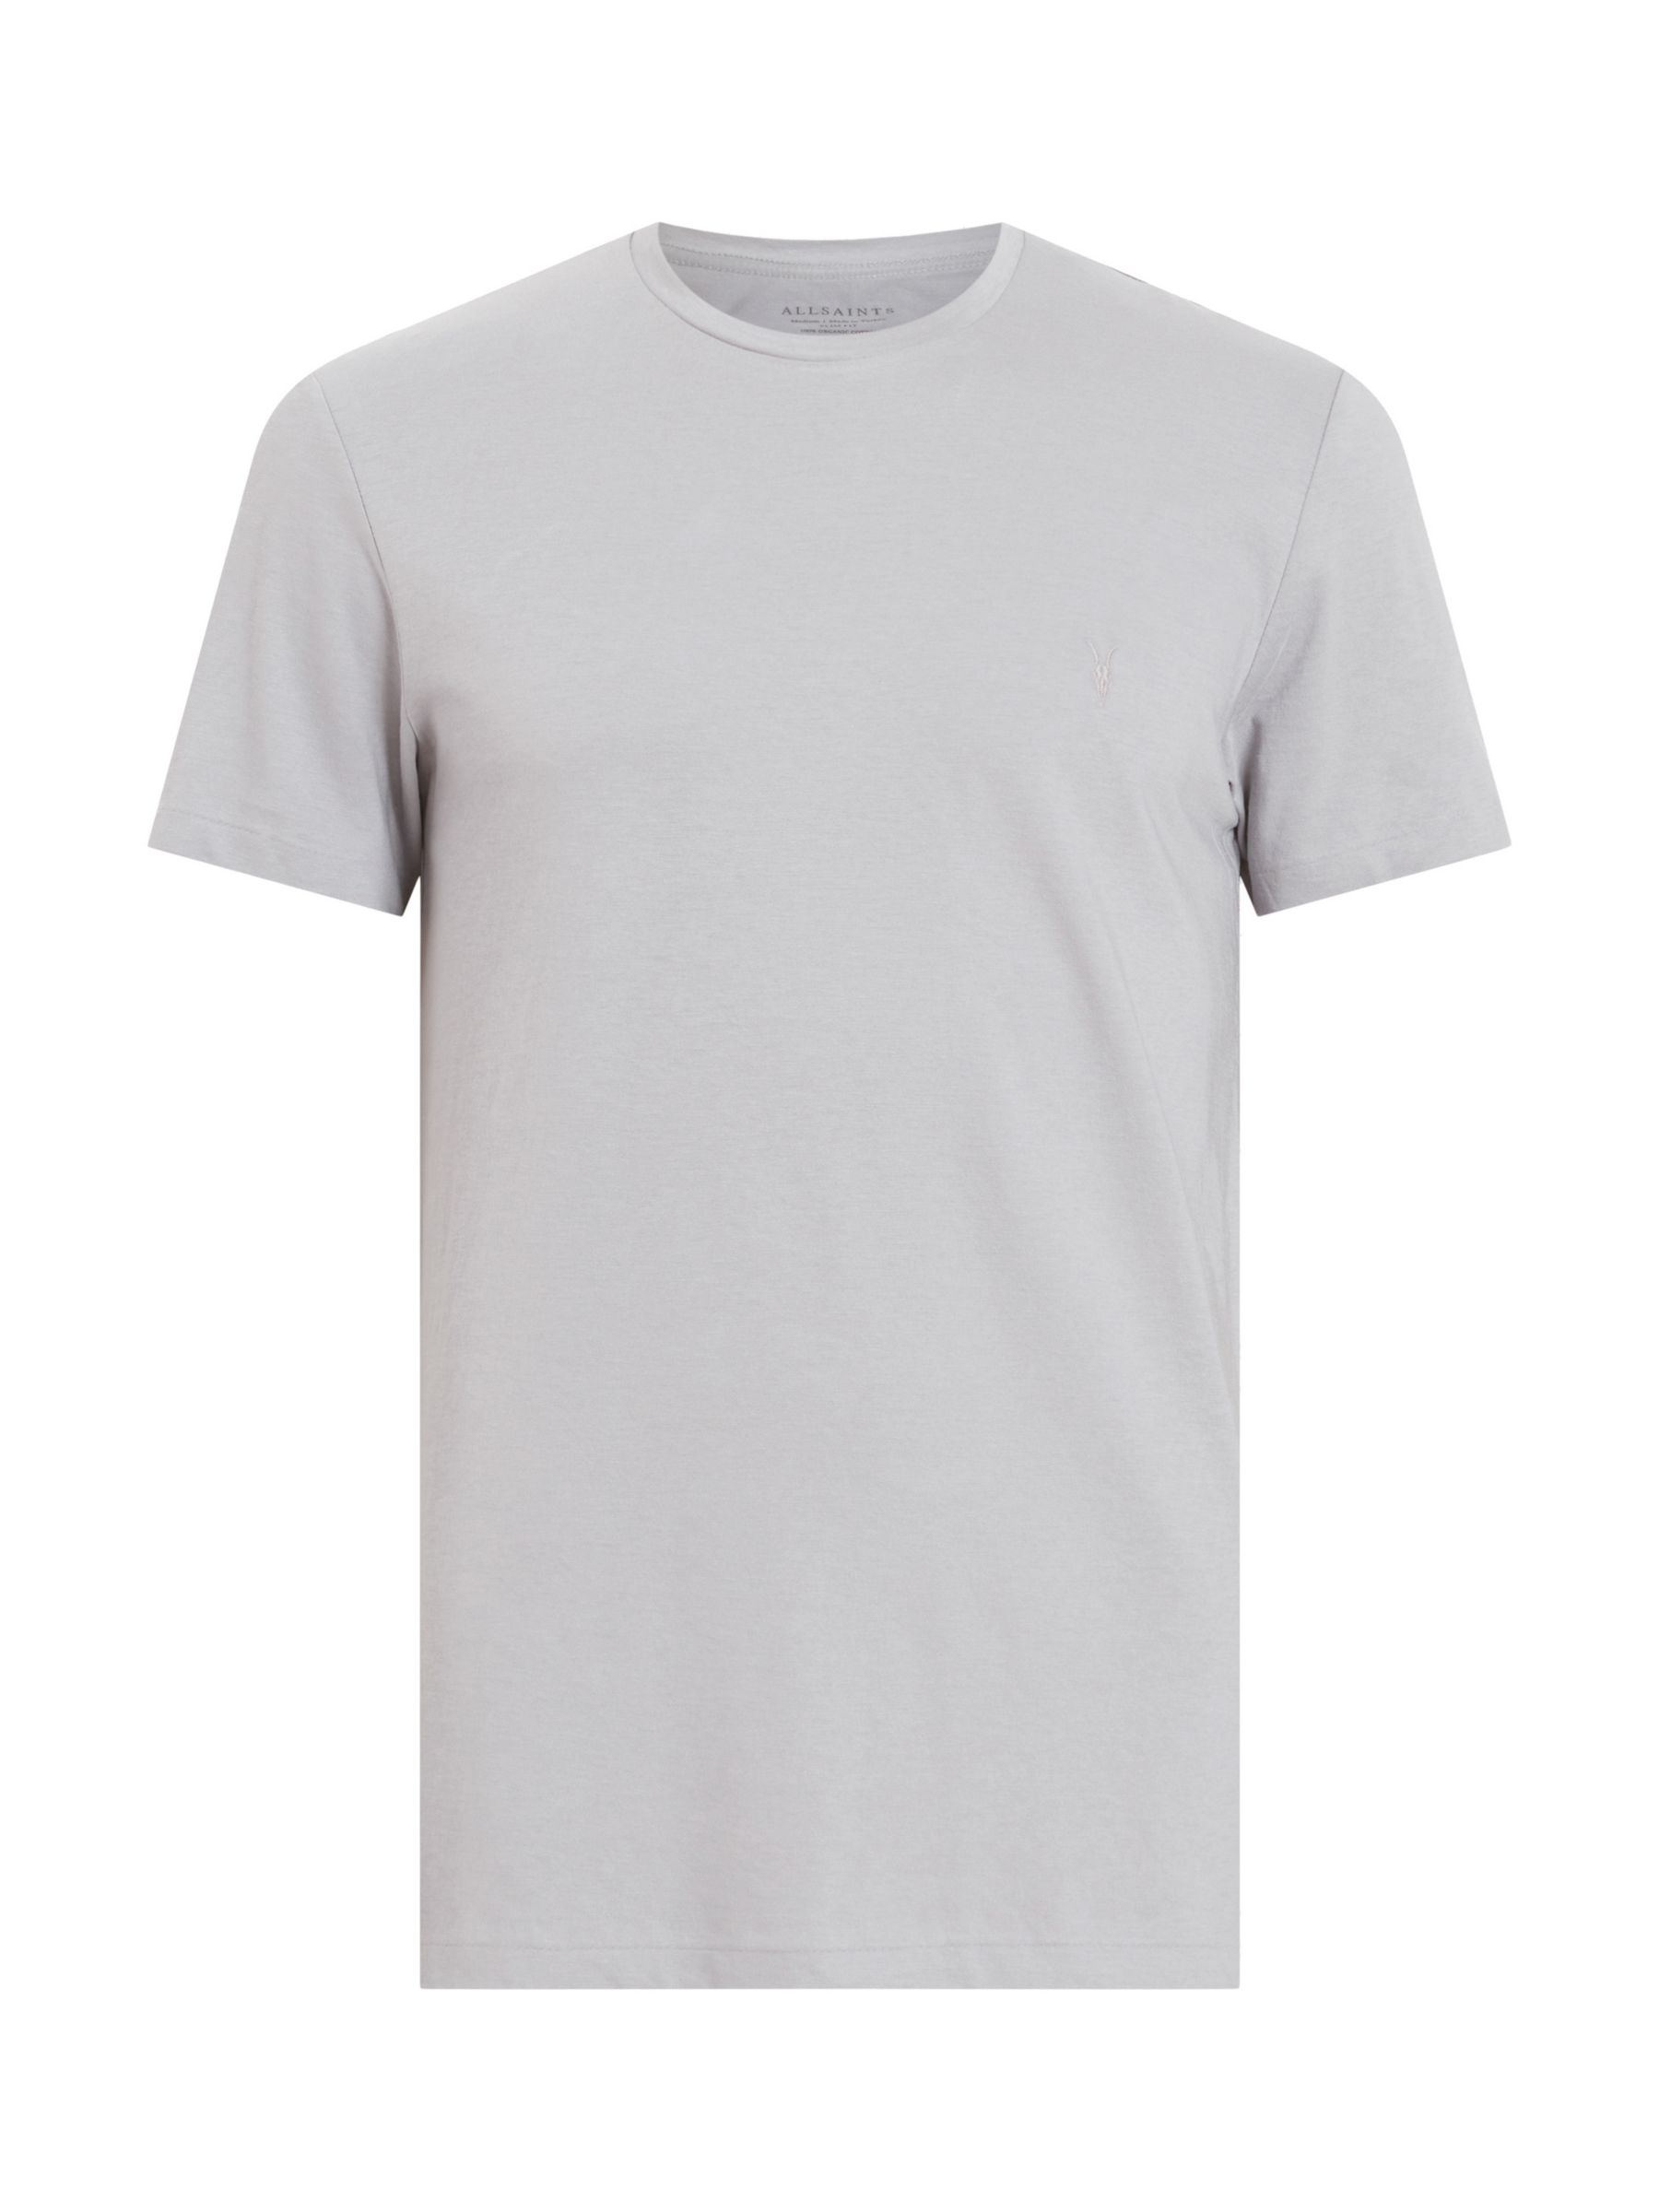 AllSaints Tonic Crew Neck T-Shirt, Skyline Grey, M